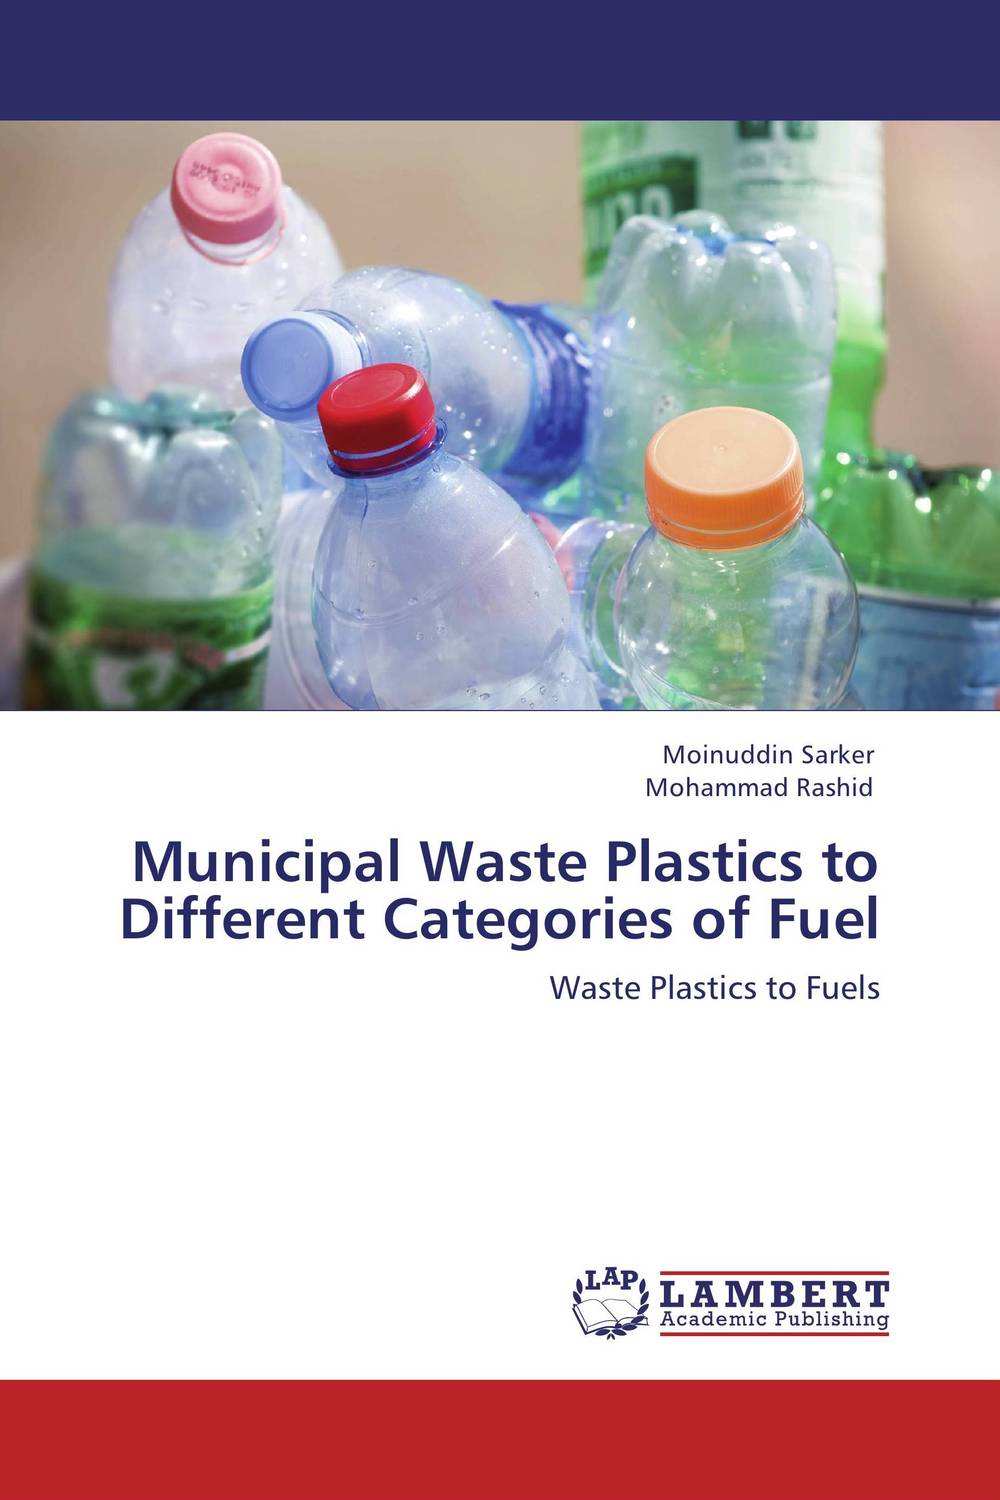 Municipal Waste Plastics to Different Categories of Fuel